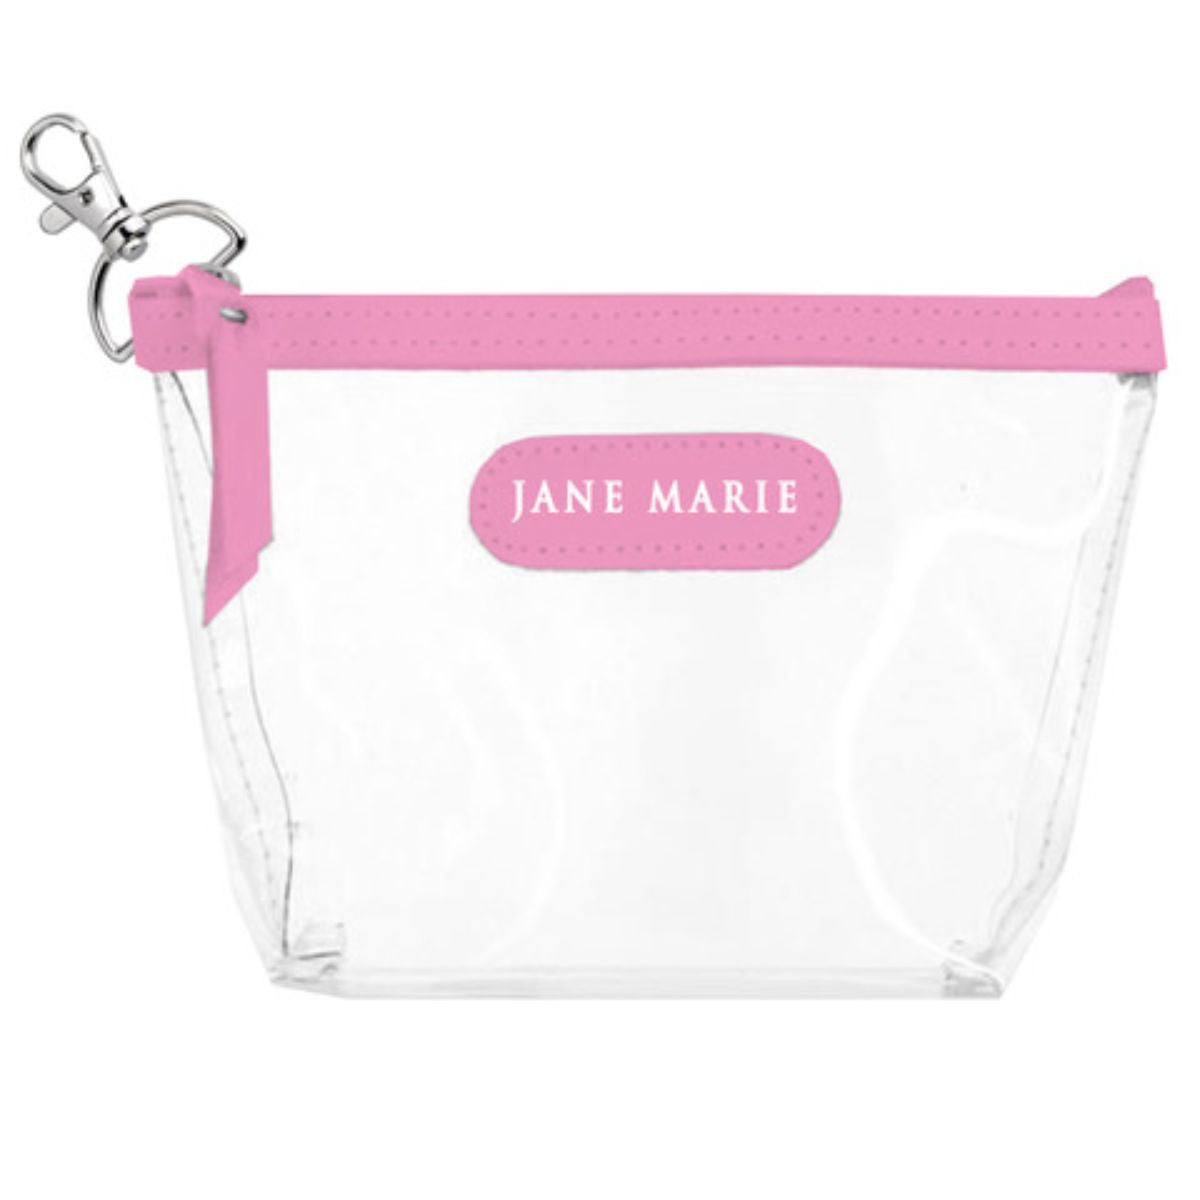 Jane Marie Clear Bag